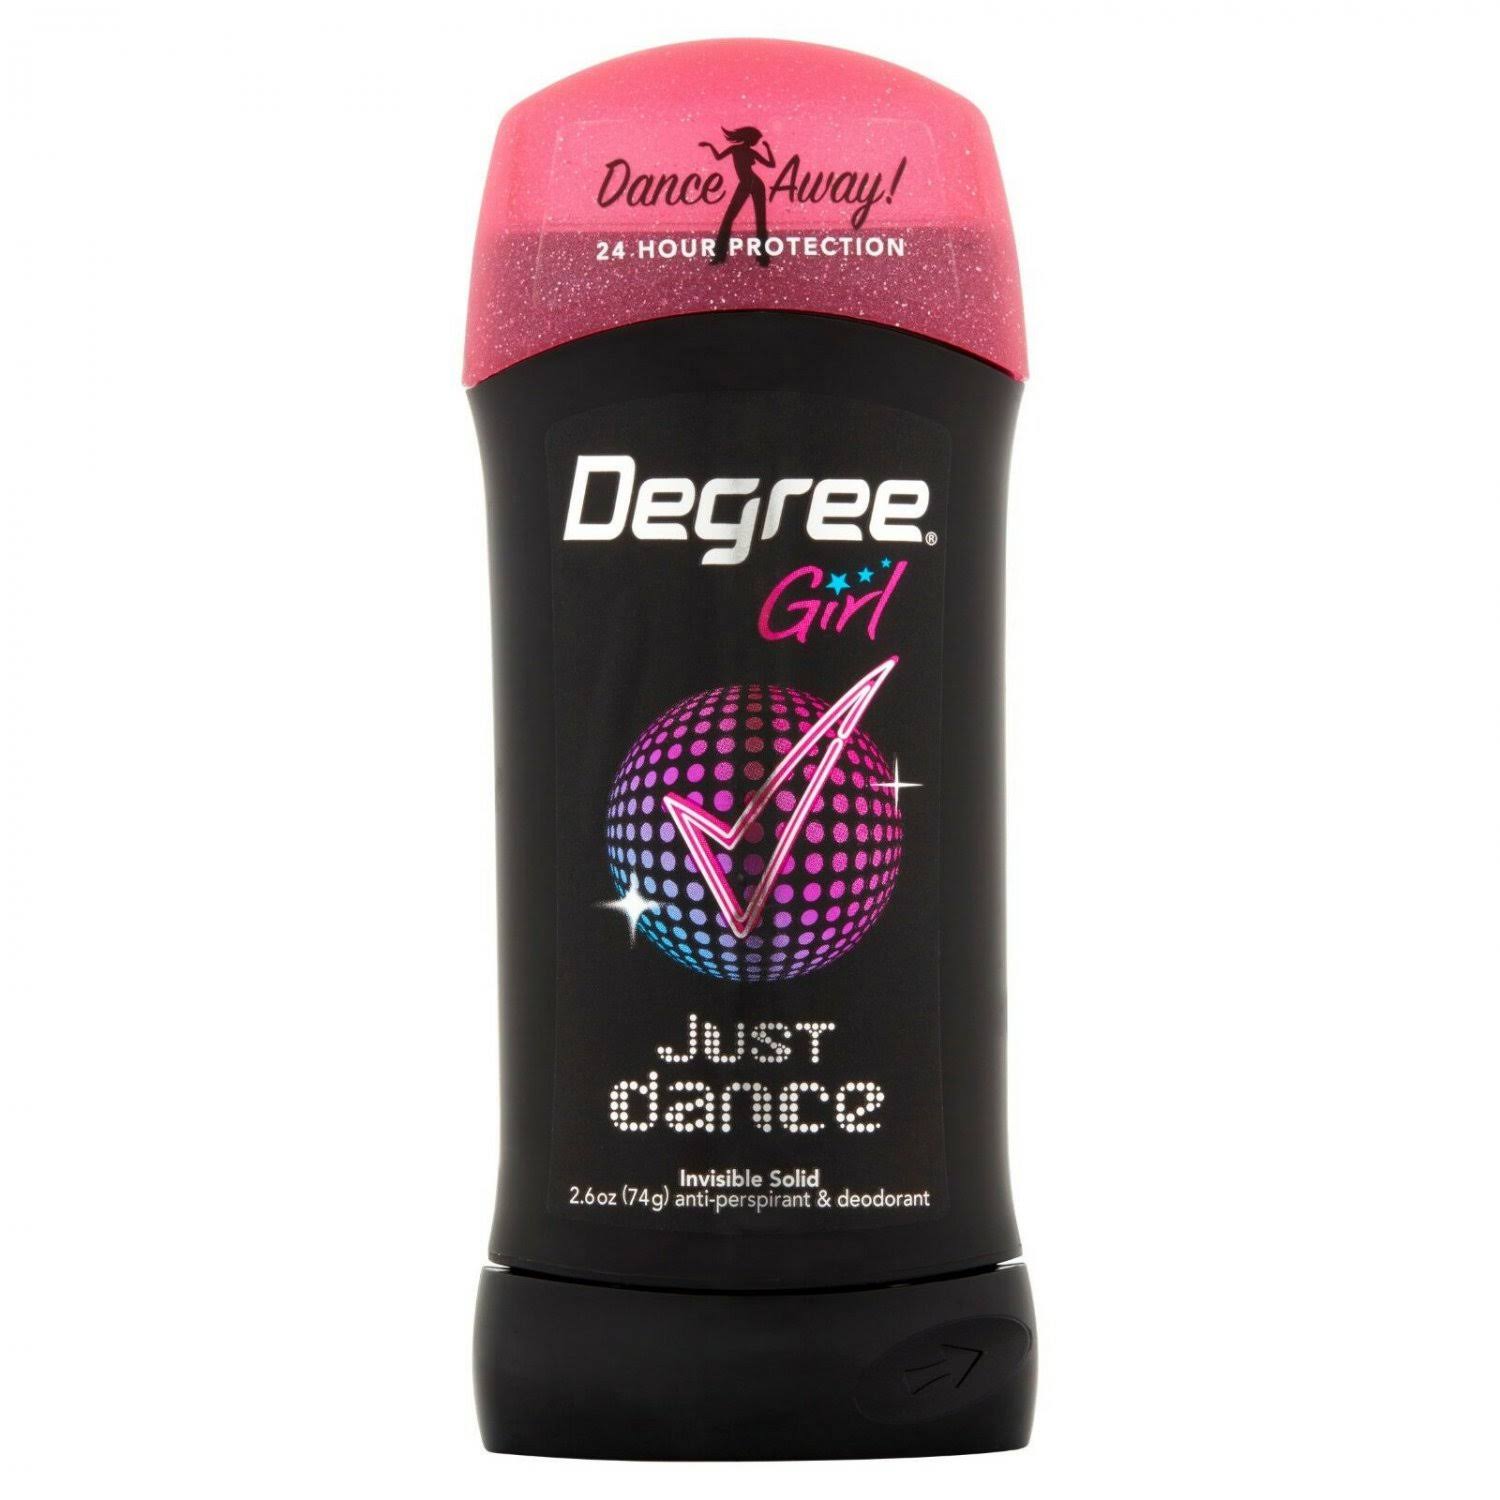 Degree Girl Just Dance Anti-Perspirant & Deodorant - Invisible Solid, 2.6oz